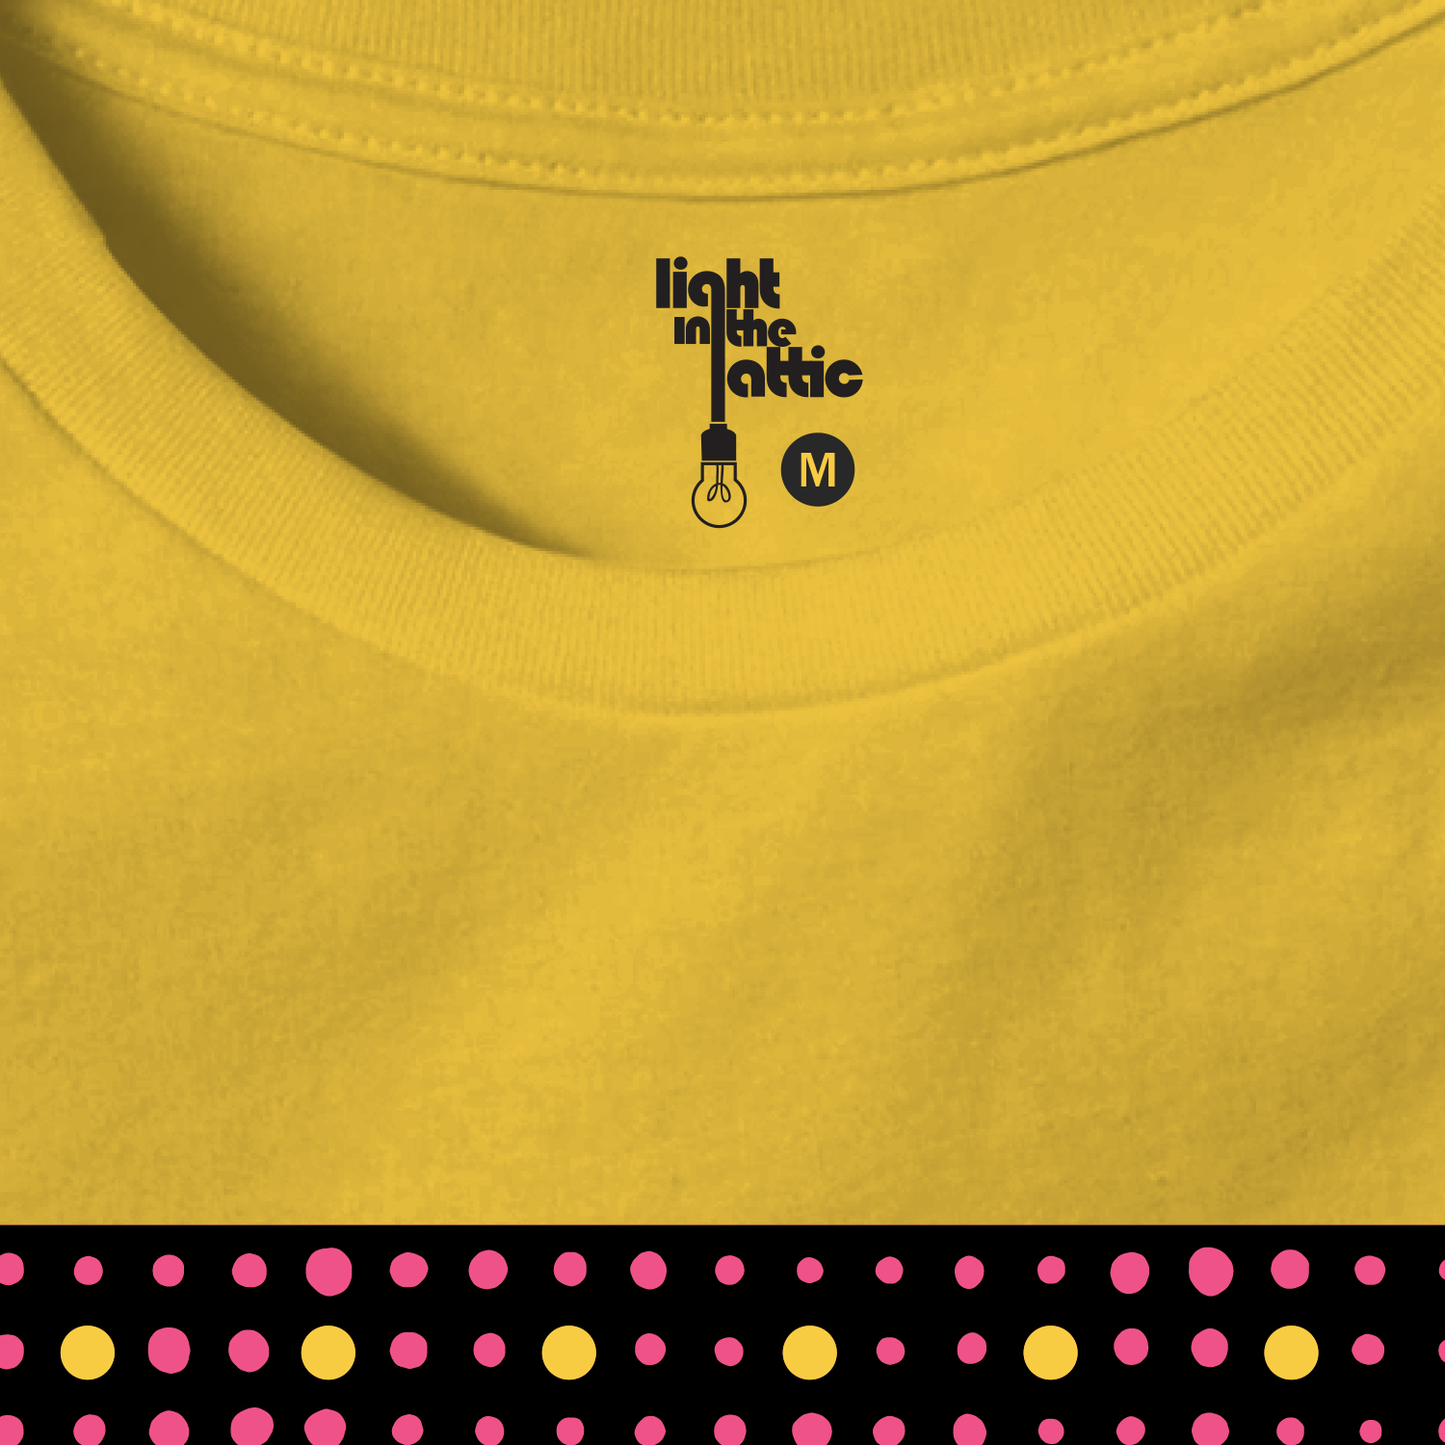 Words & Music, May 1965 -  Yellow T-Shirt